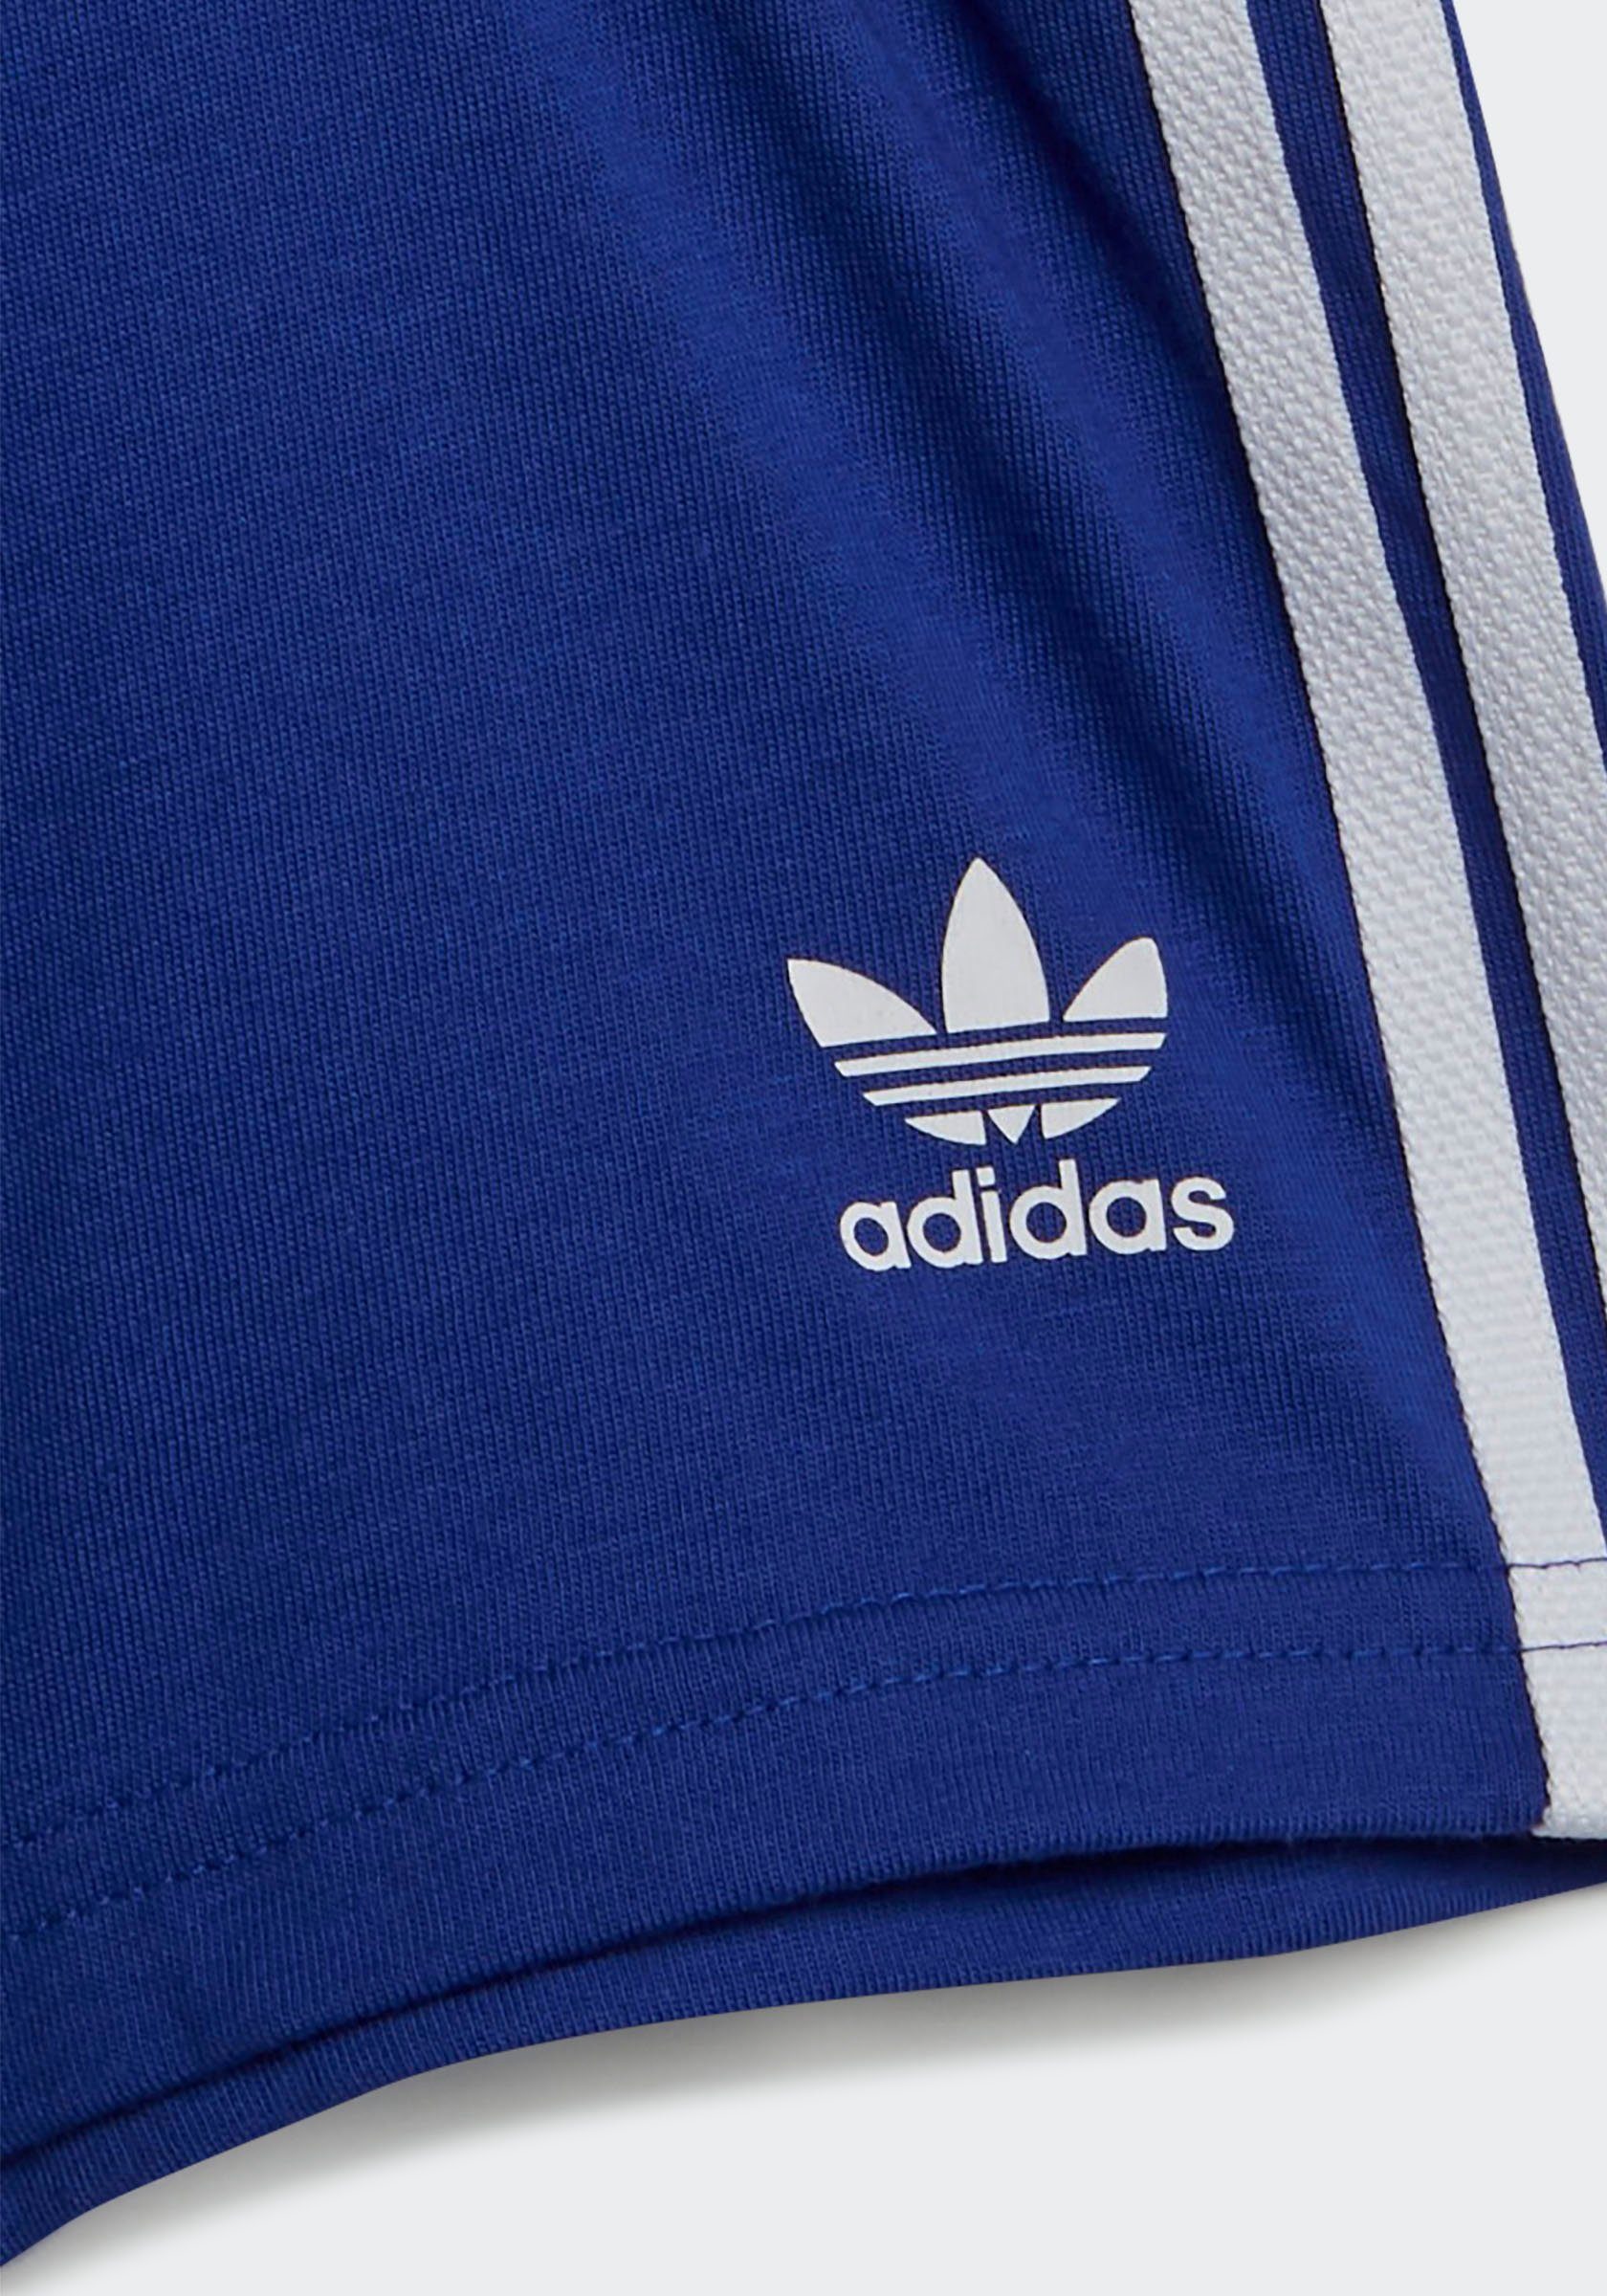 adidas Originals T-Shirt & Shorts SHORTS TREFOIL Blue (Set) Semi UND Lucid SET